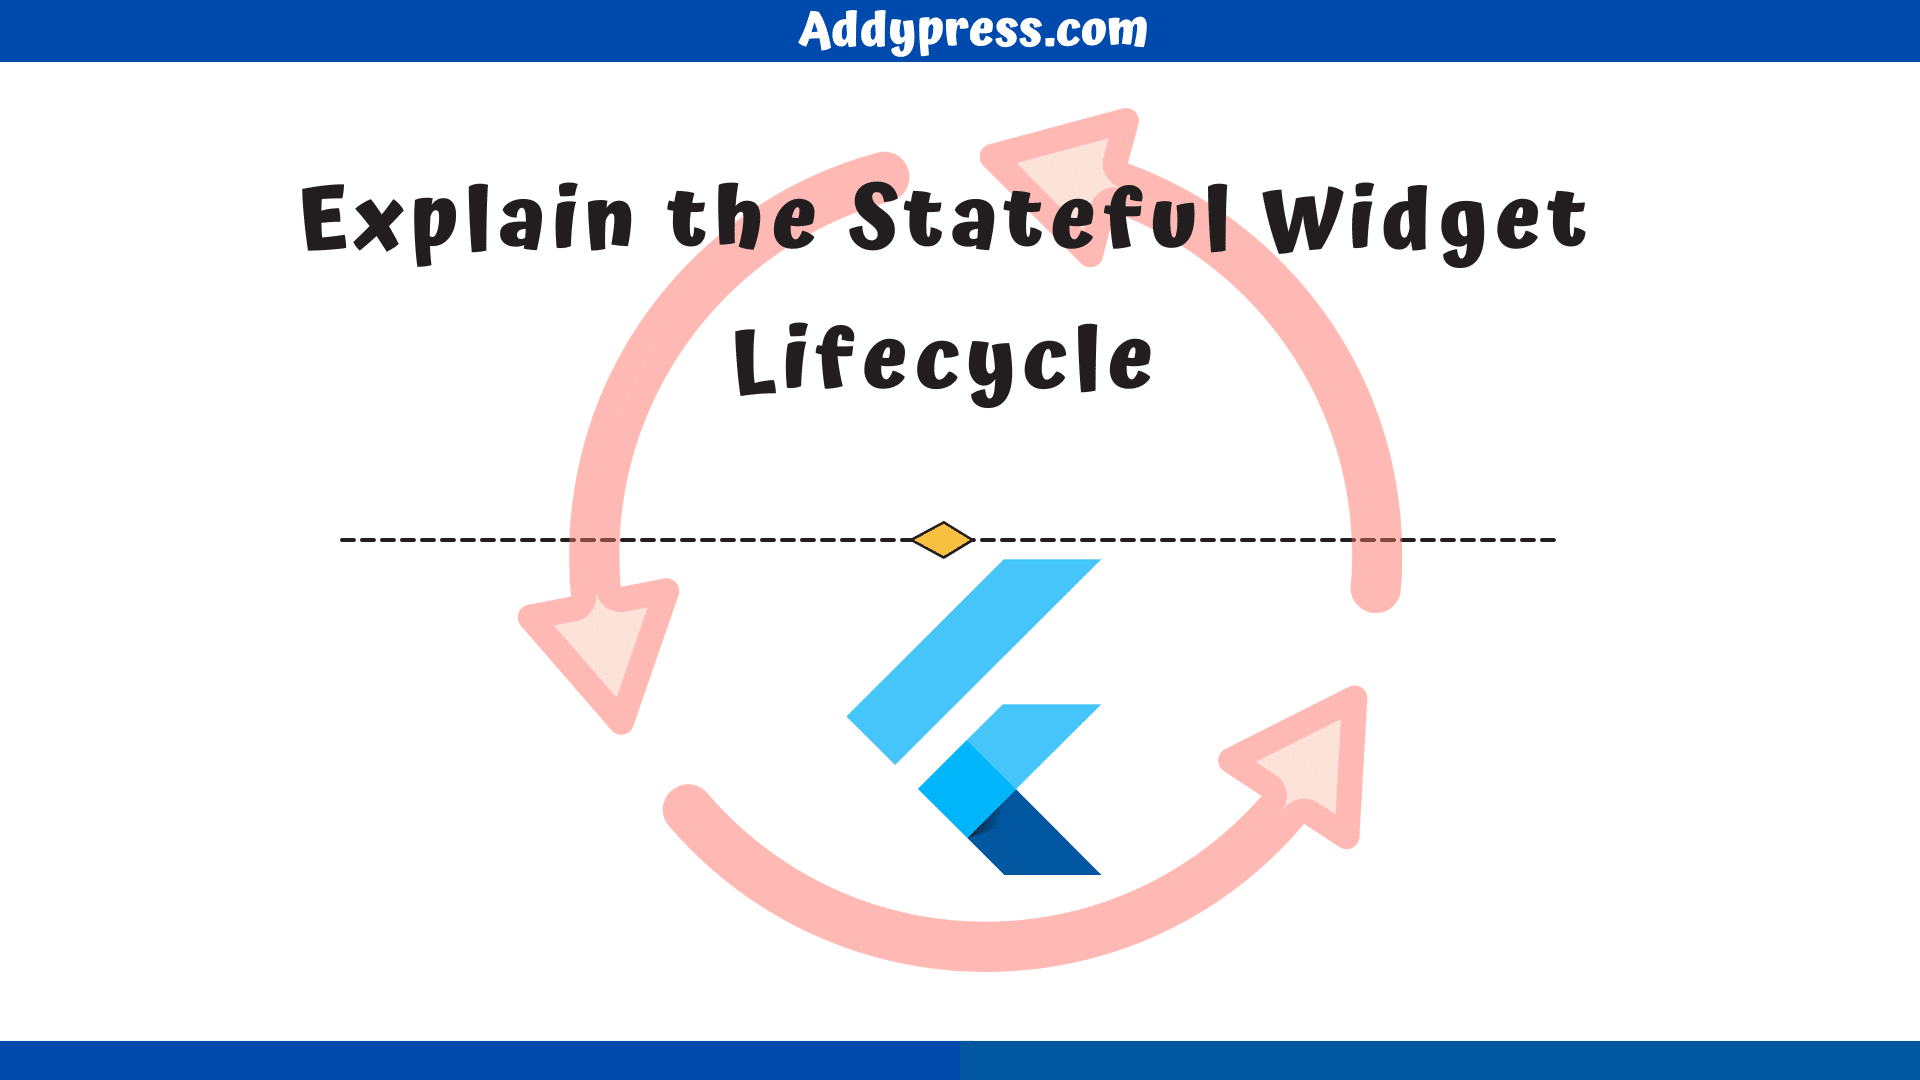 Explain the Stateful Widget Lifecycle